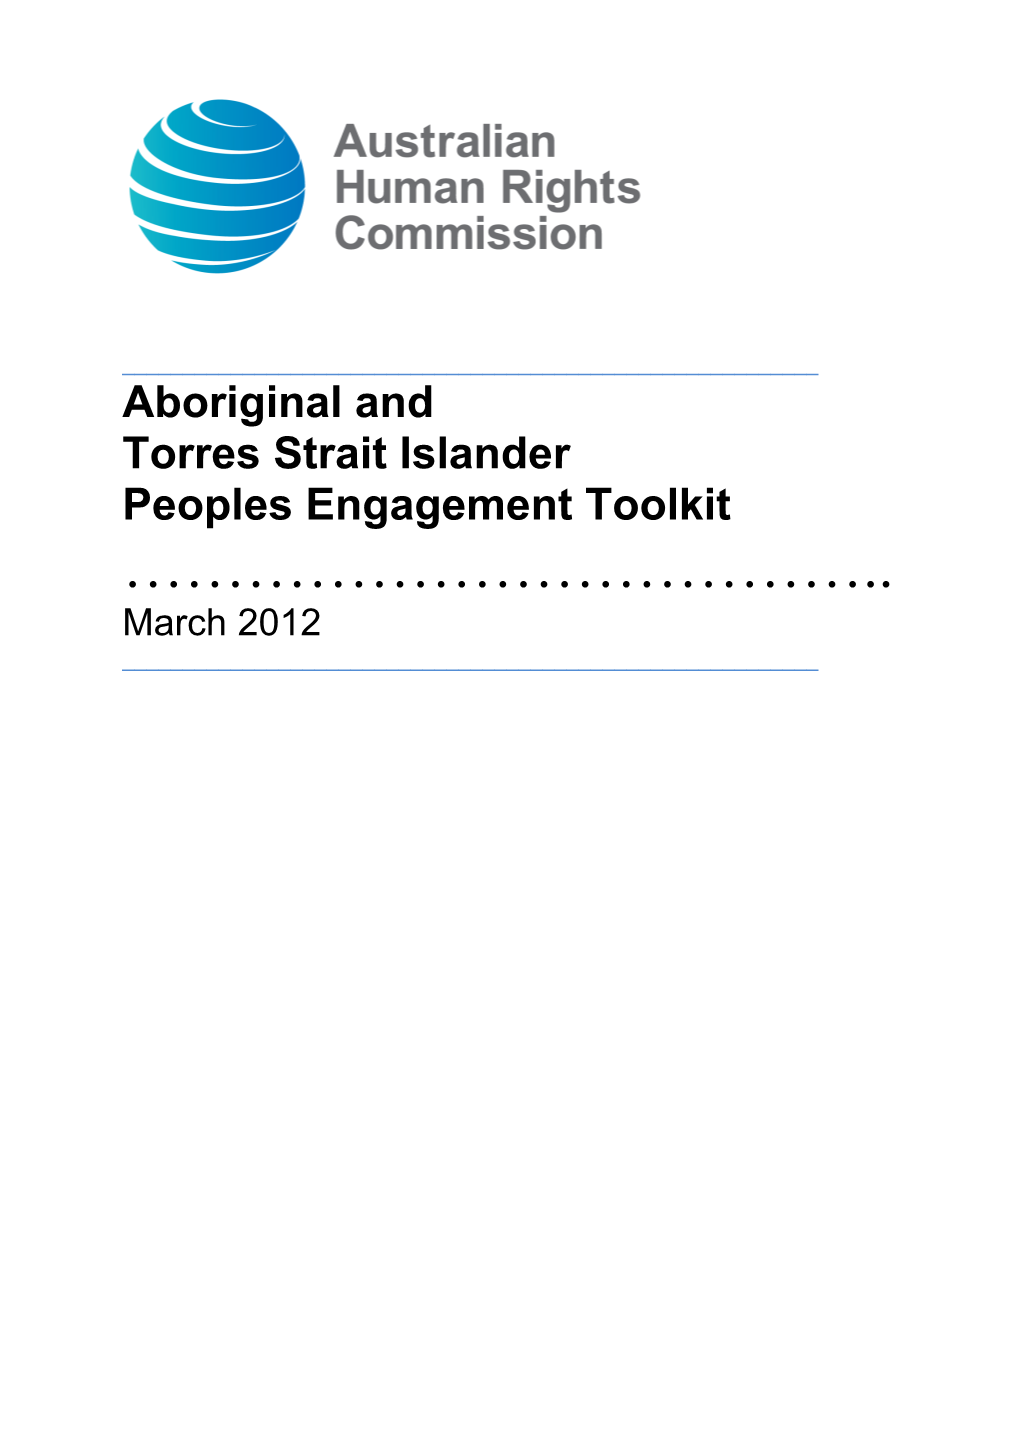 Aboriginal and Torres Strait Islander Peoples Engagement Toolkit 2012